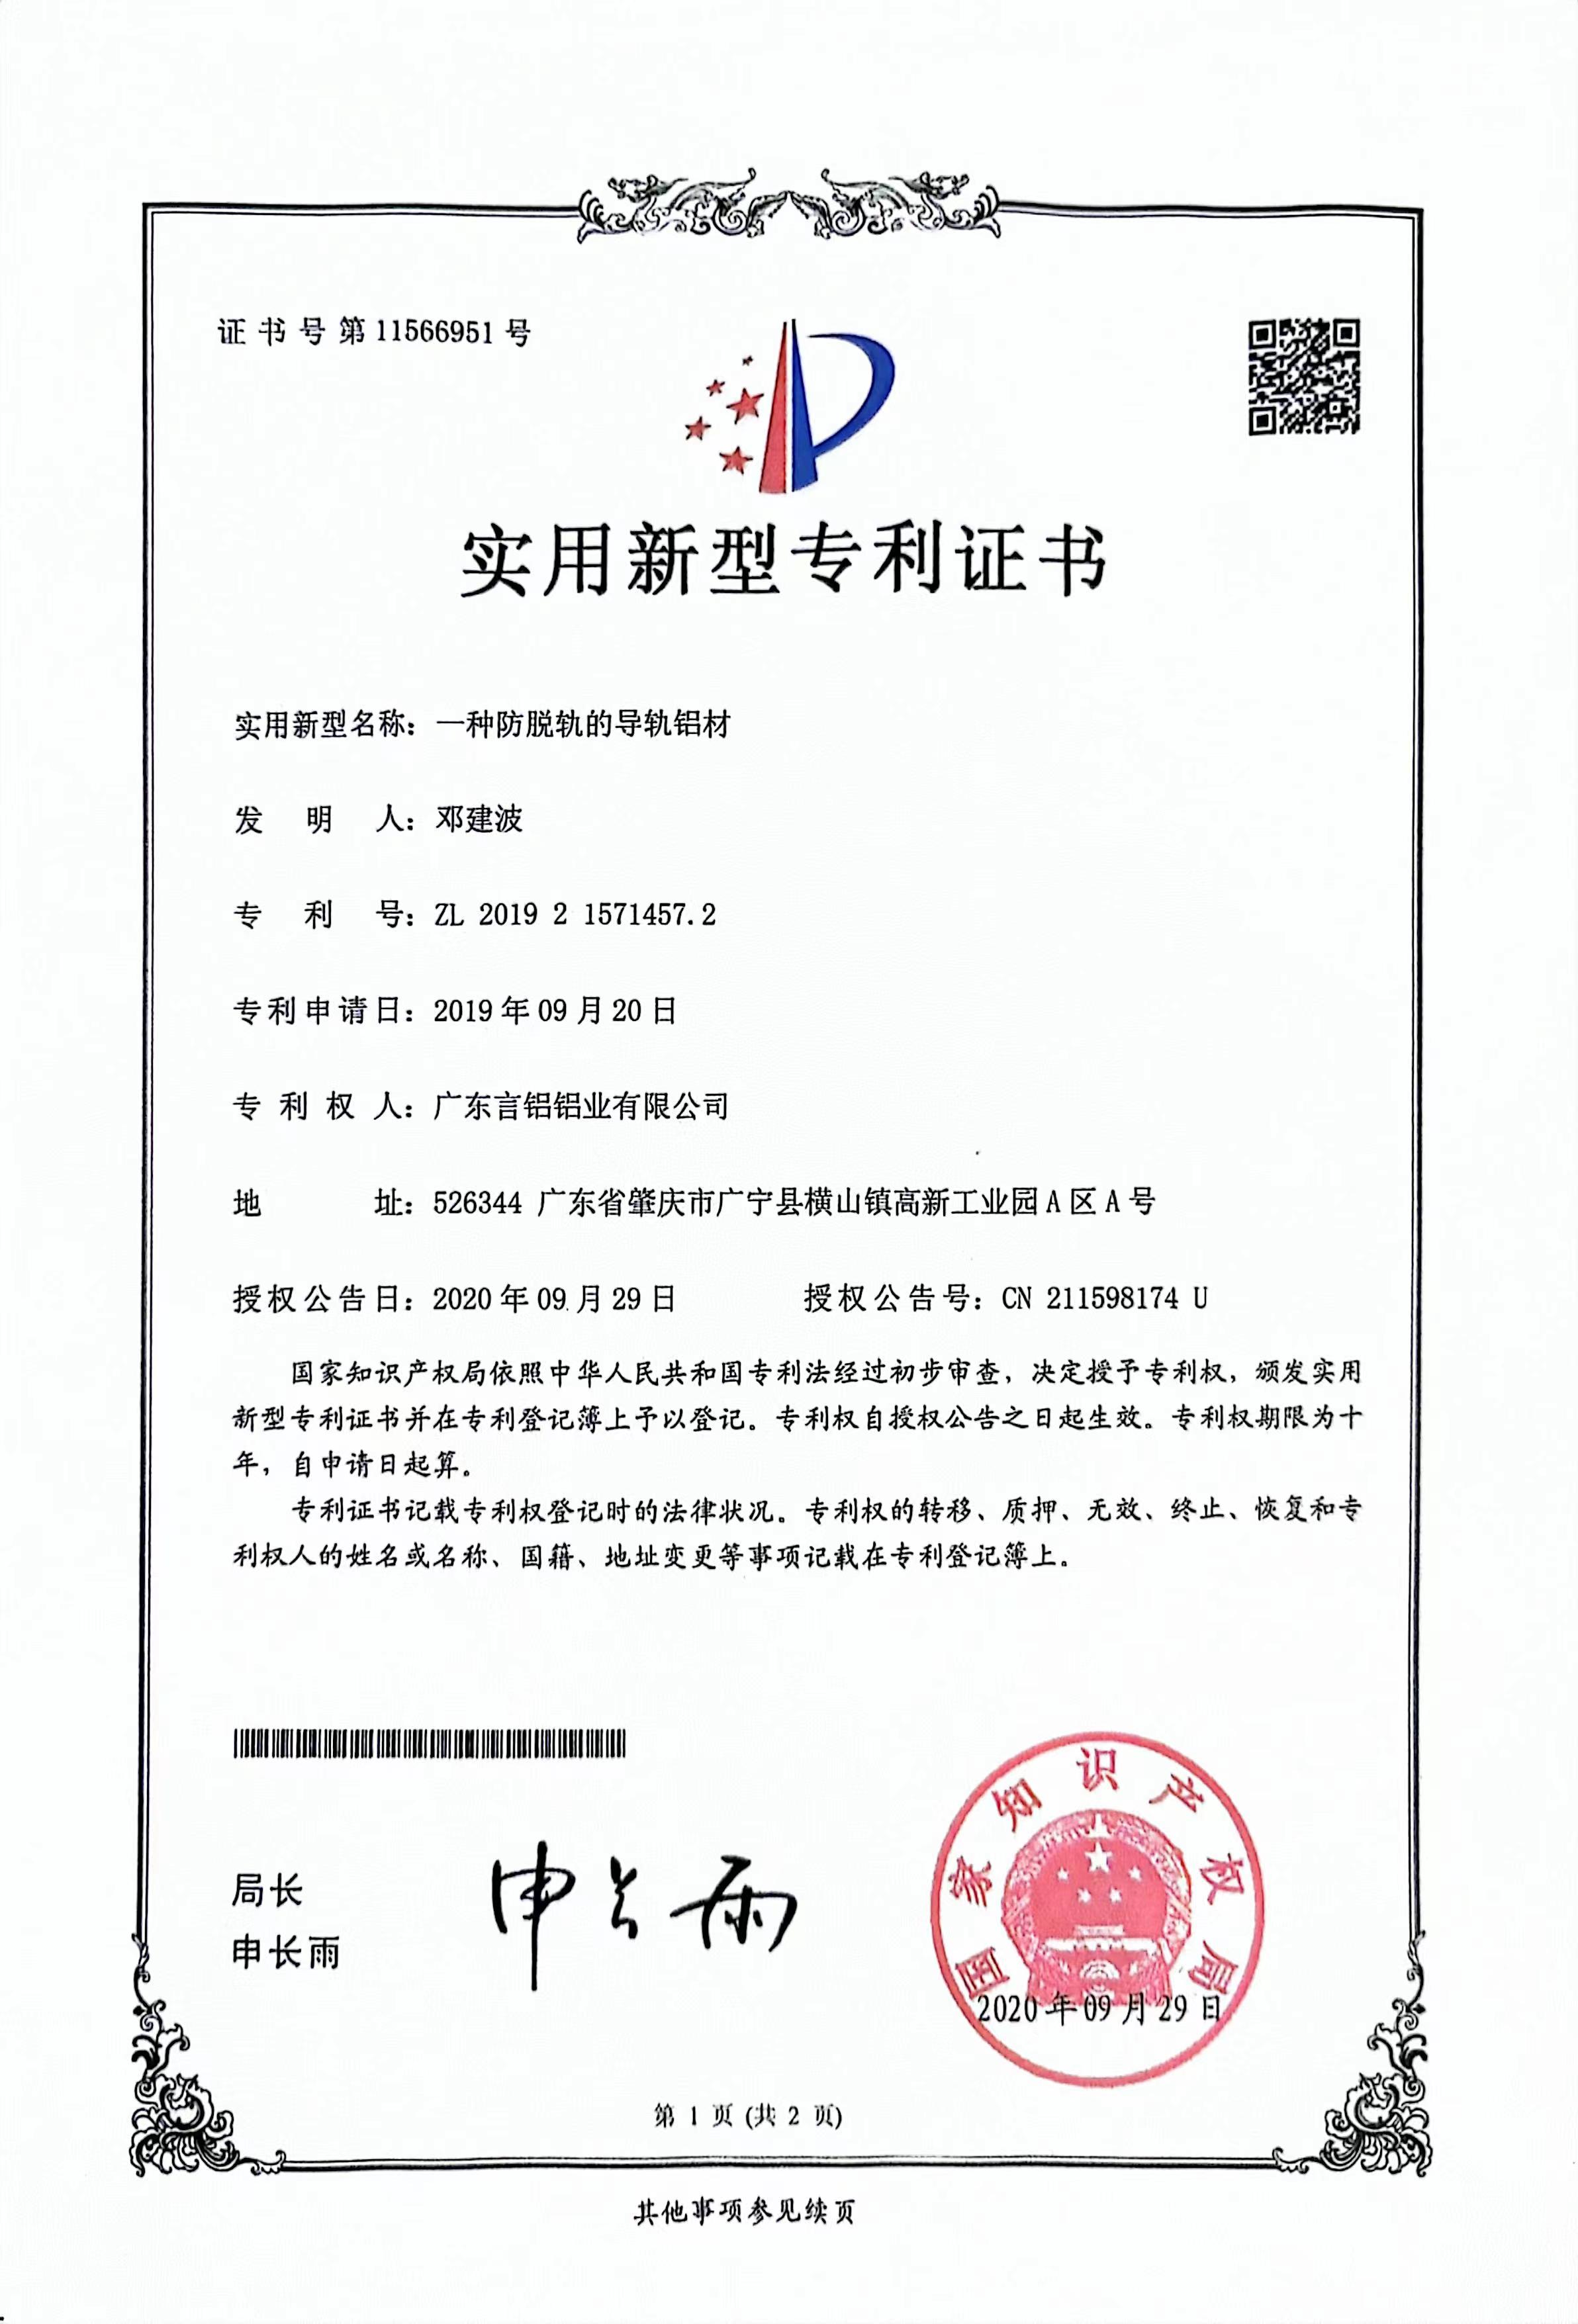 Patent certificate 6.jpg